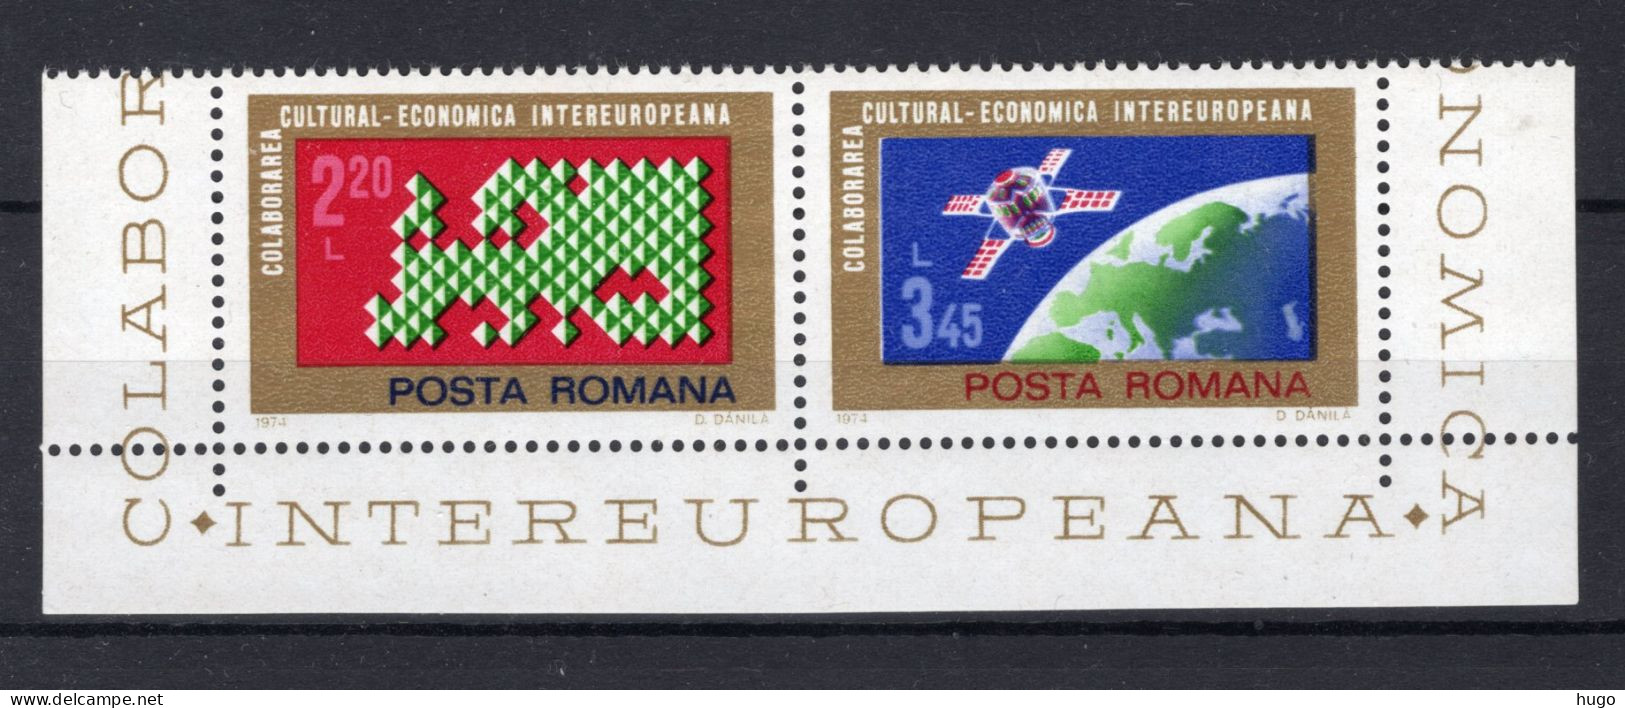 ROEMENIE Yt. 2836/2837 MNH 1974 - Unused Stamps